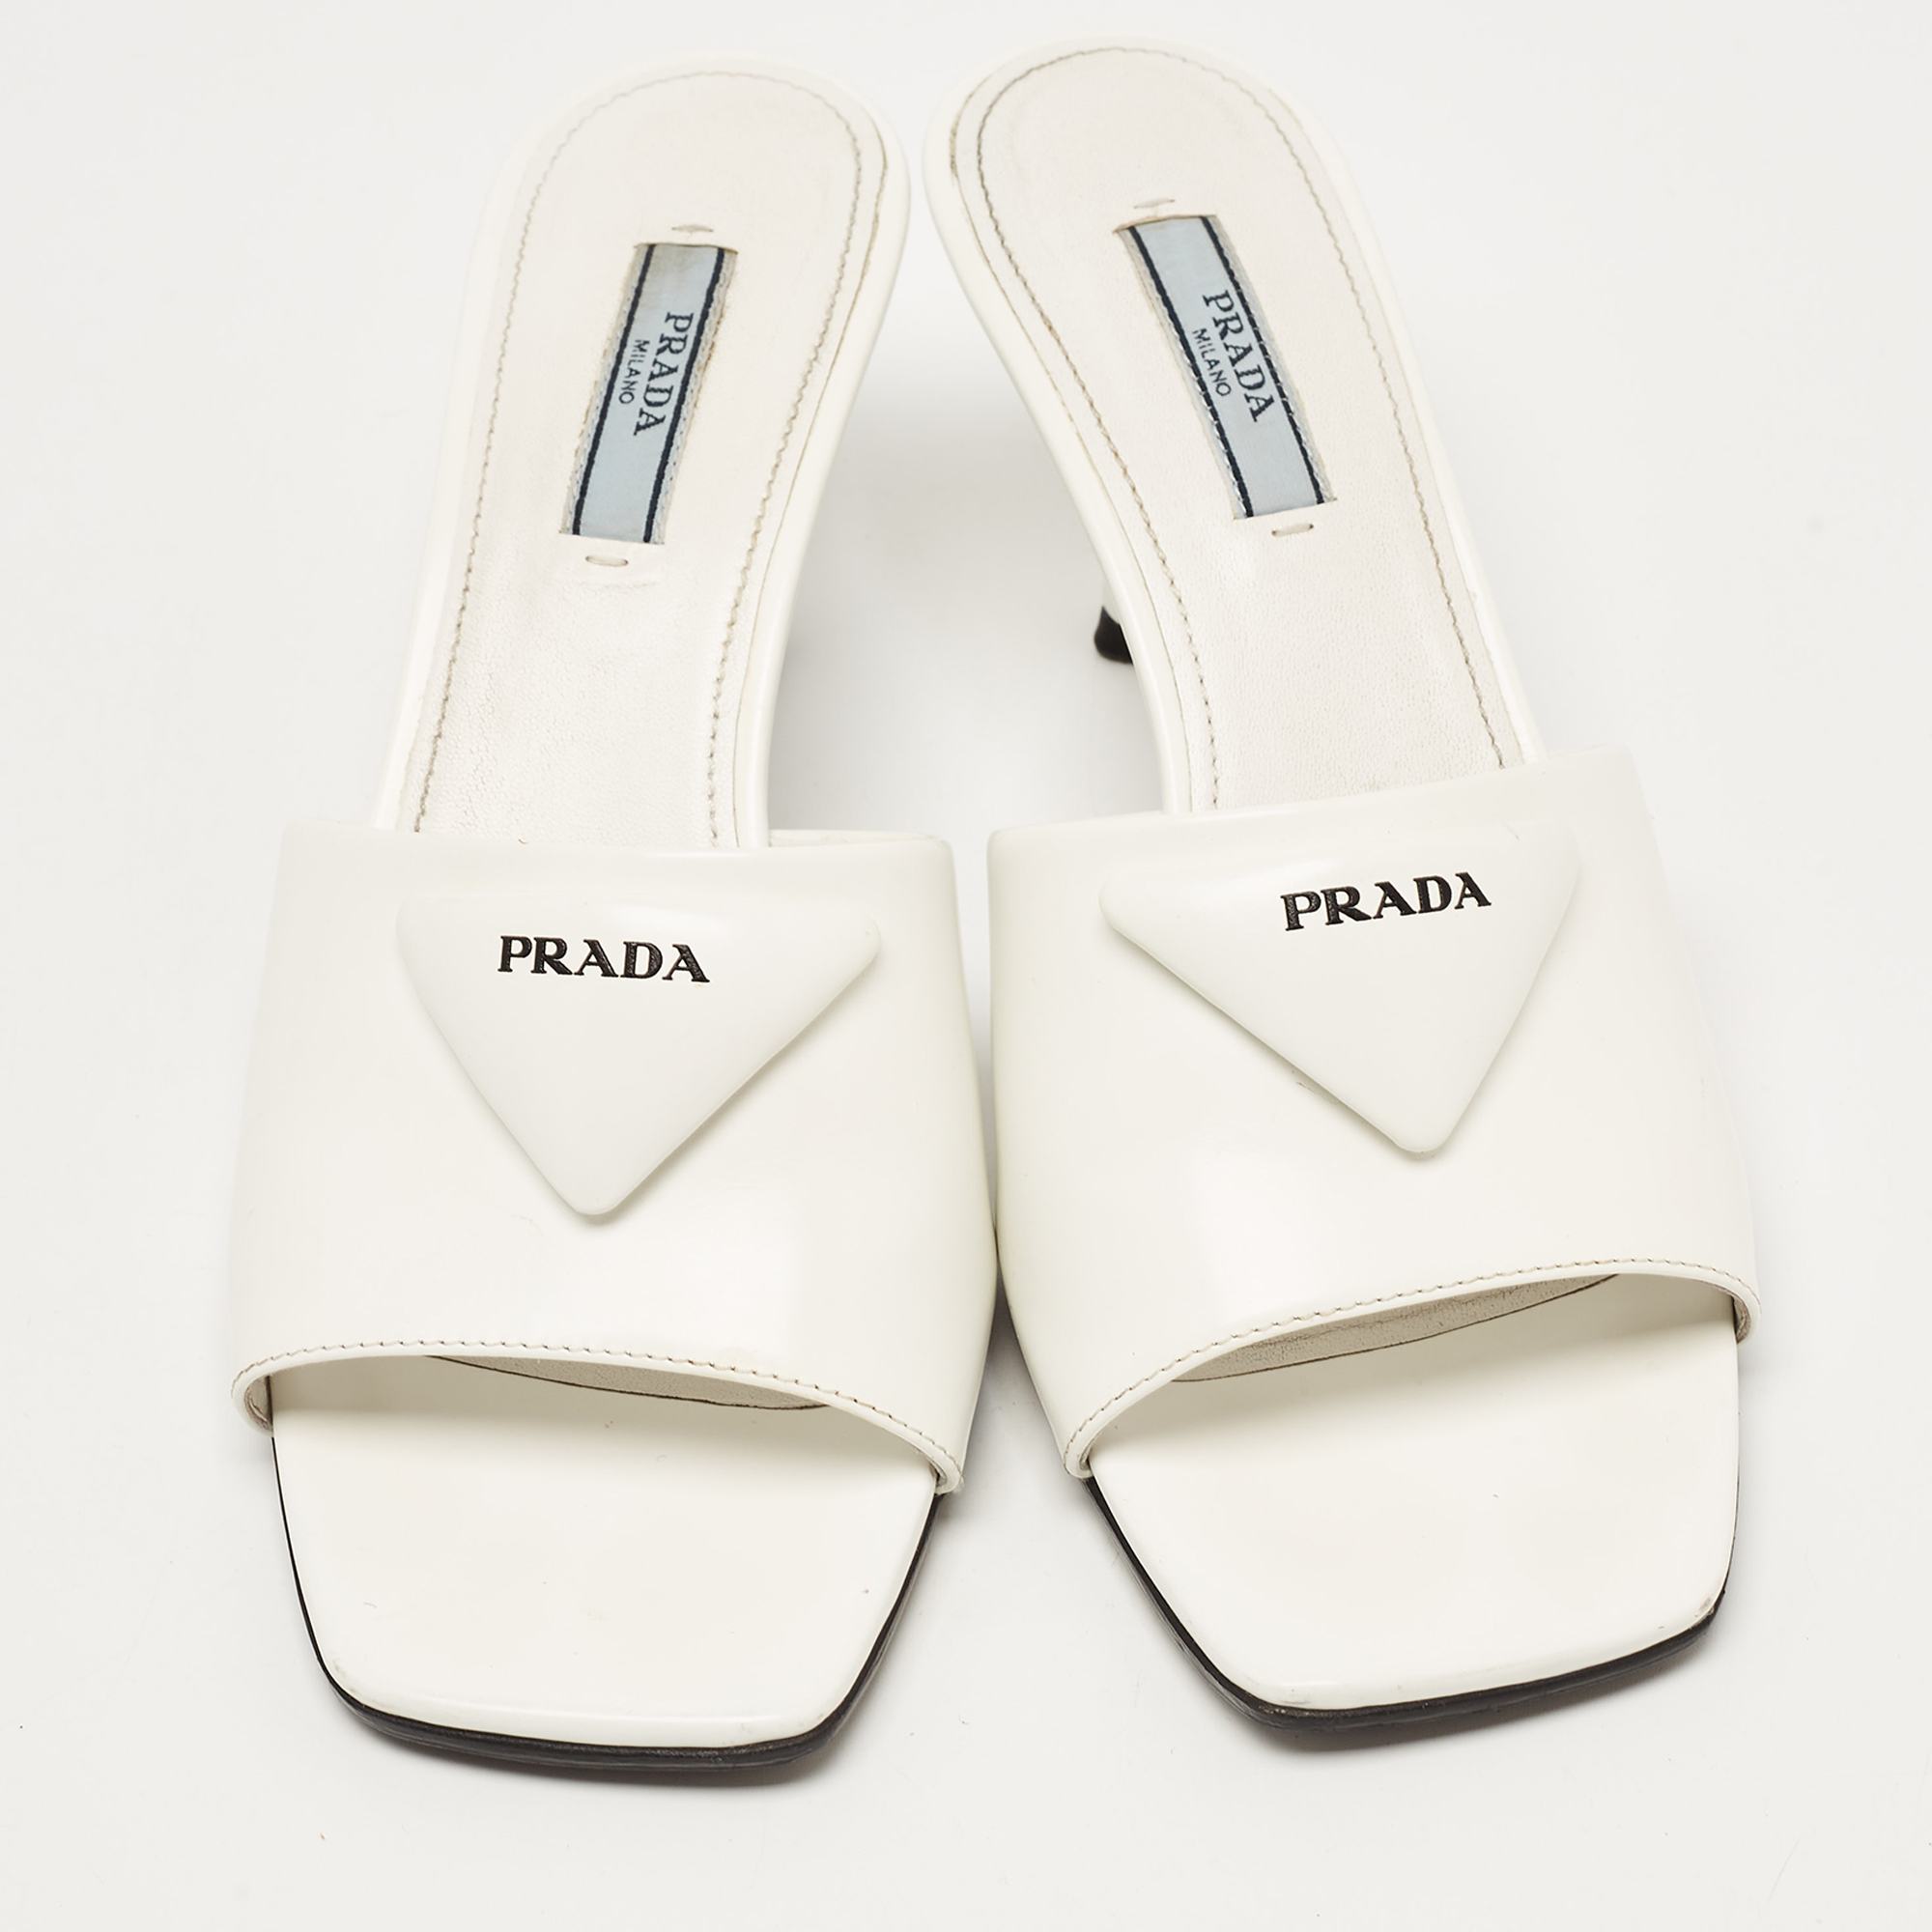 Prada White Leather Logo Slide Sandals Size 37.5